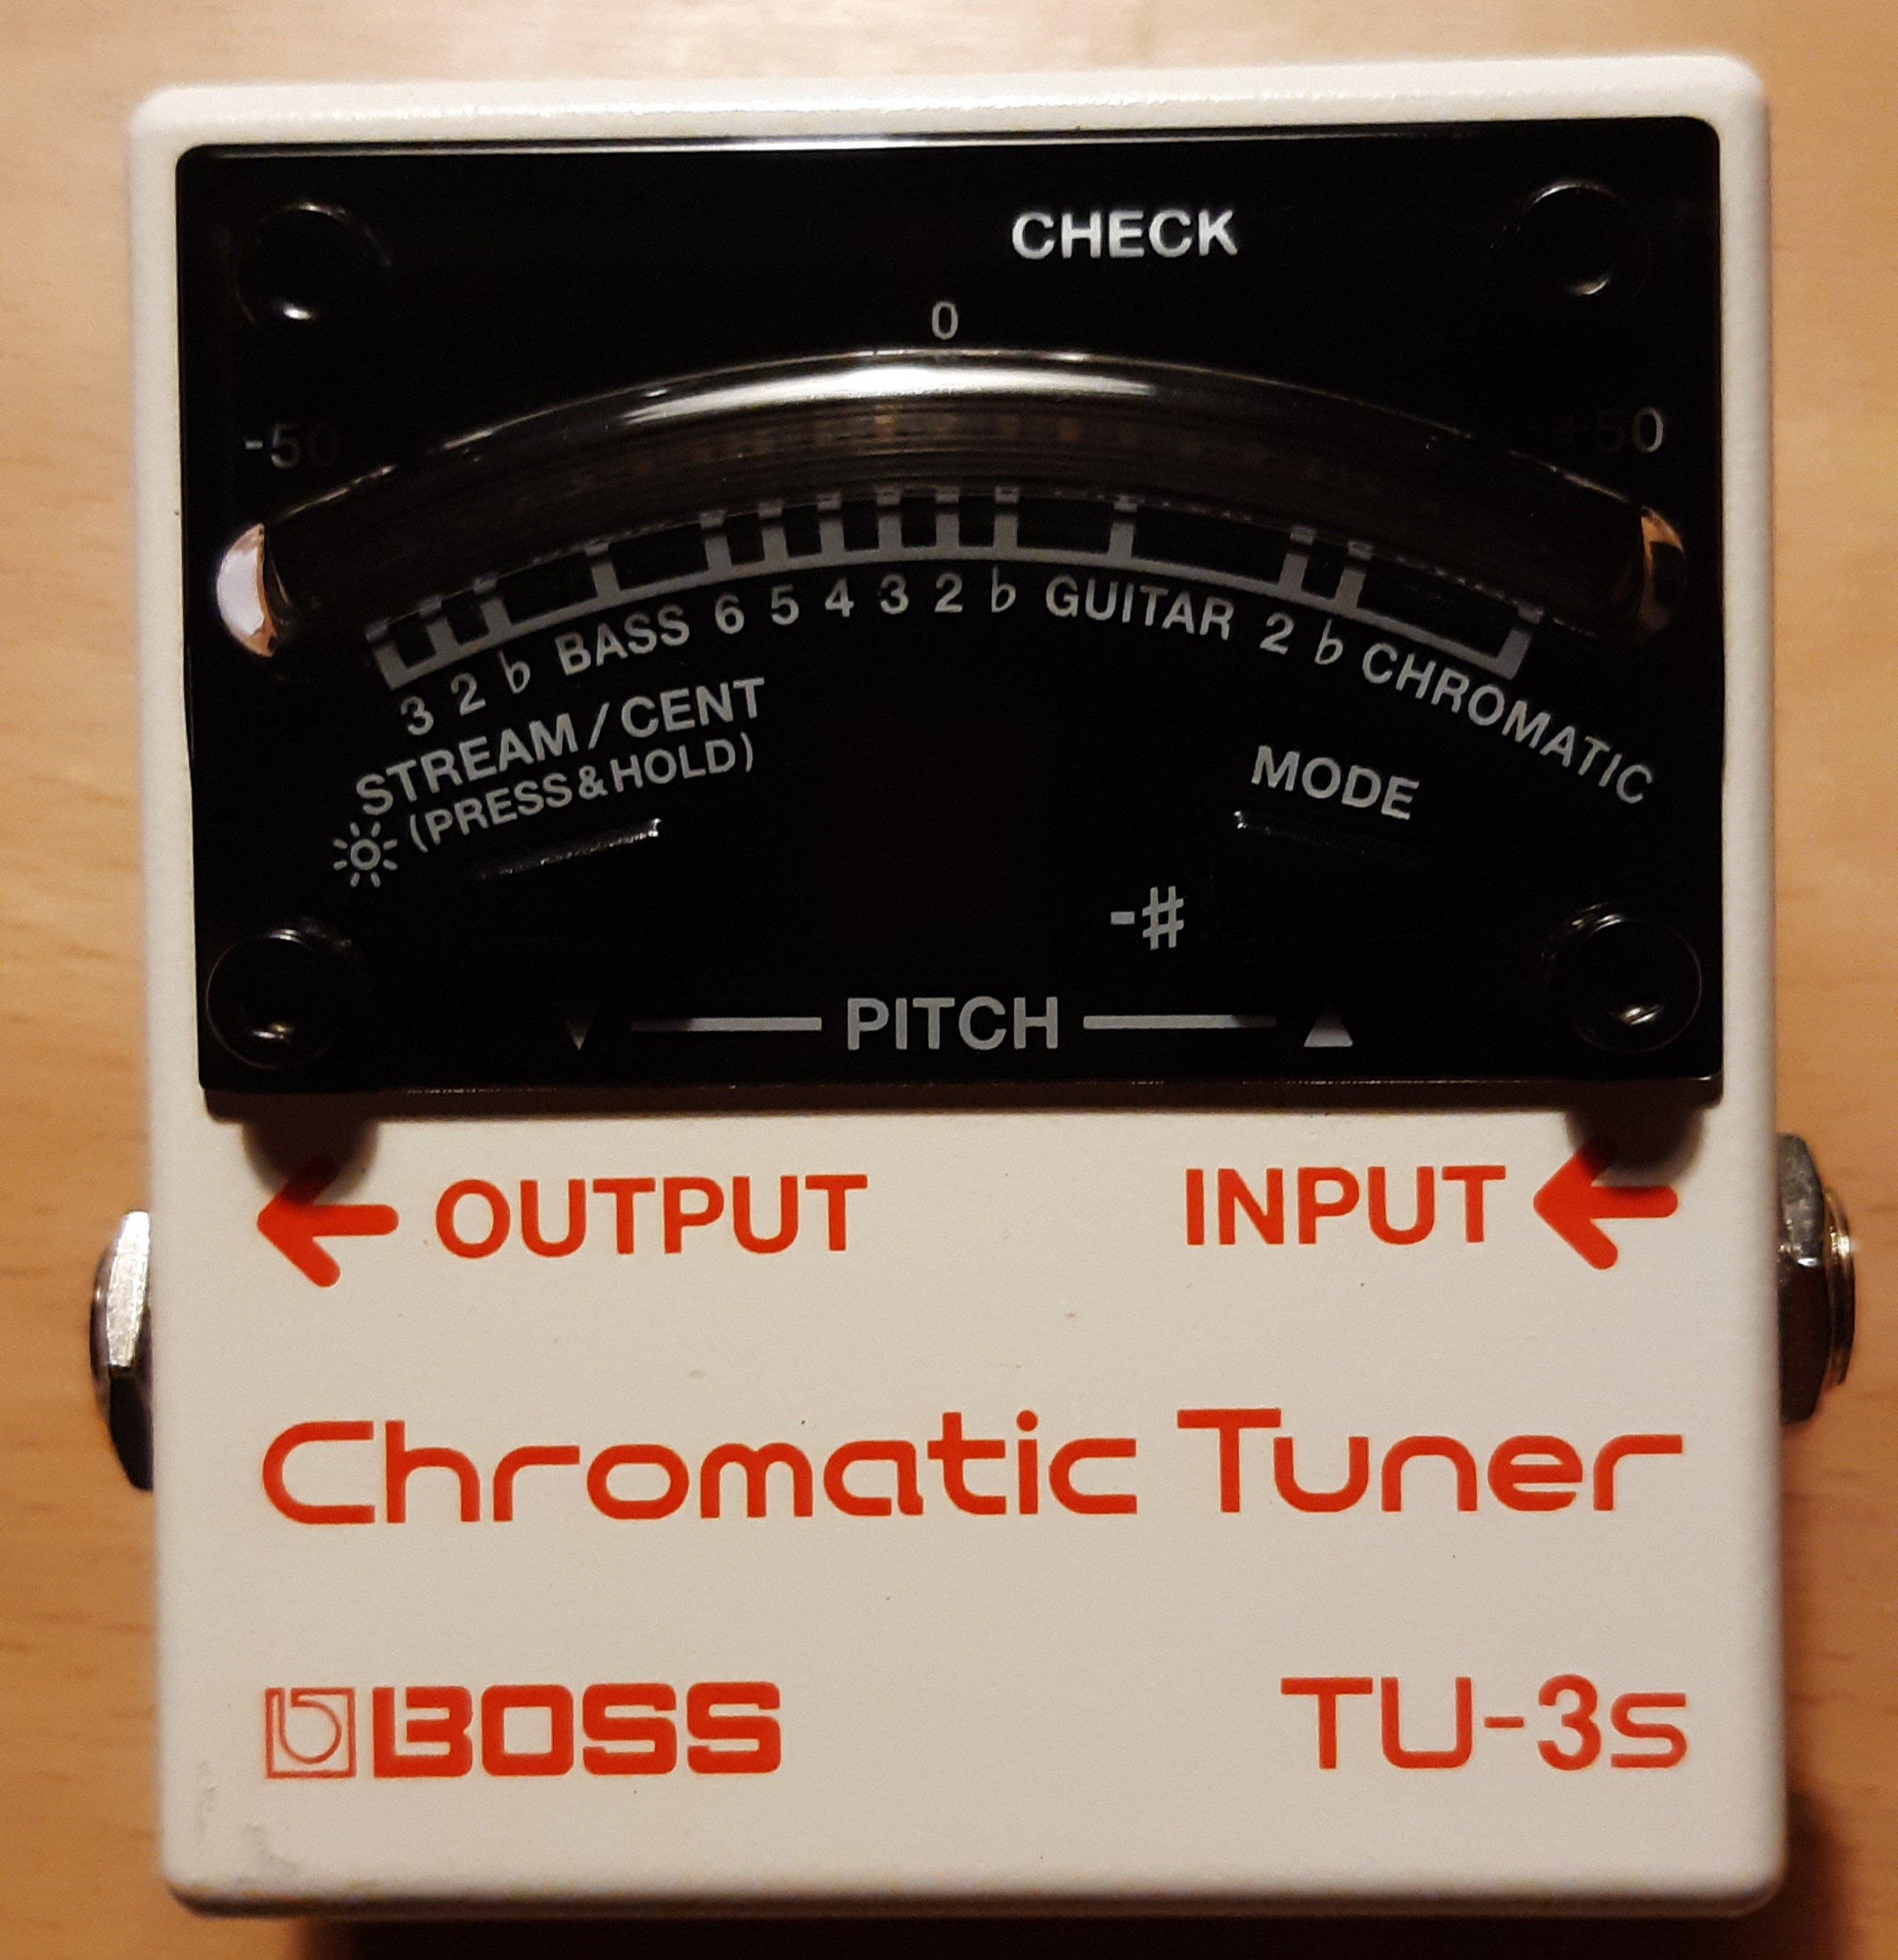 TU-3S Chromatic Tuner Pedale accordeur Boss